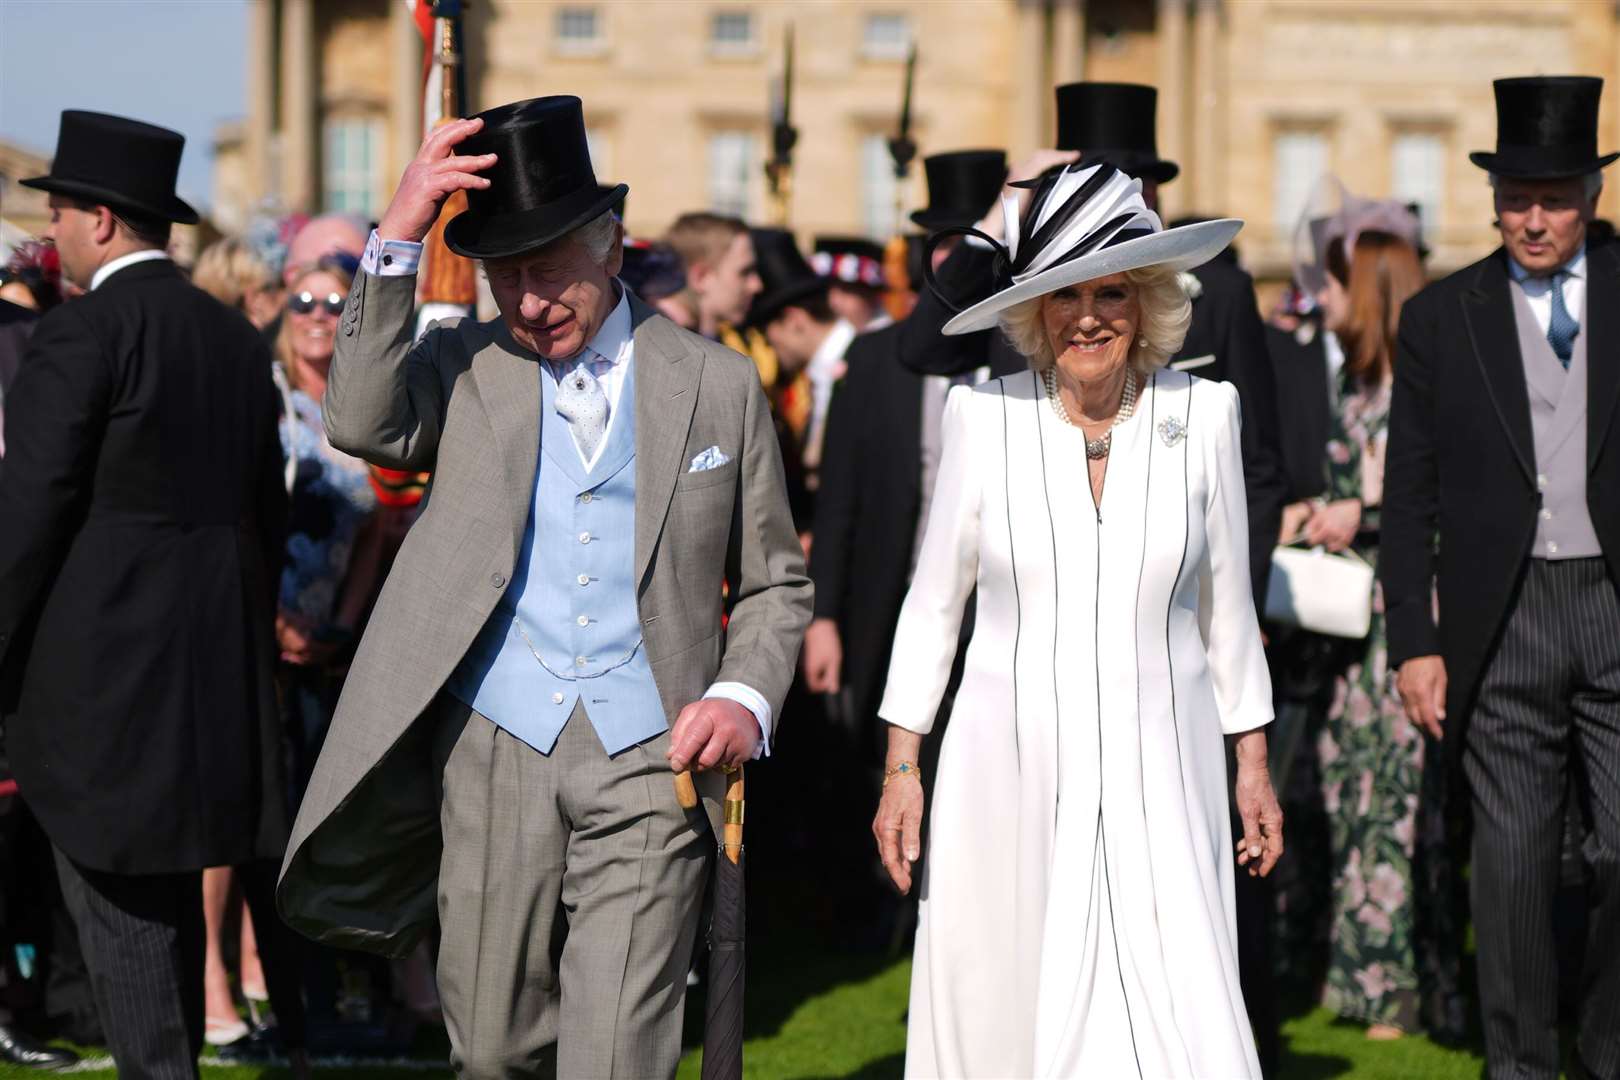 Charles and Camilla at the Buckingham Palace garden party (Jordan Pettitt/PA)